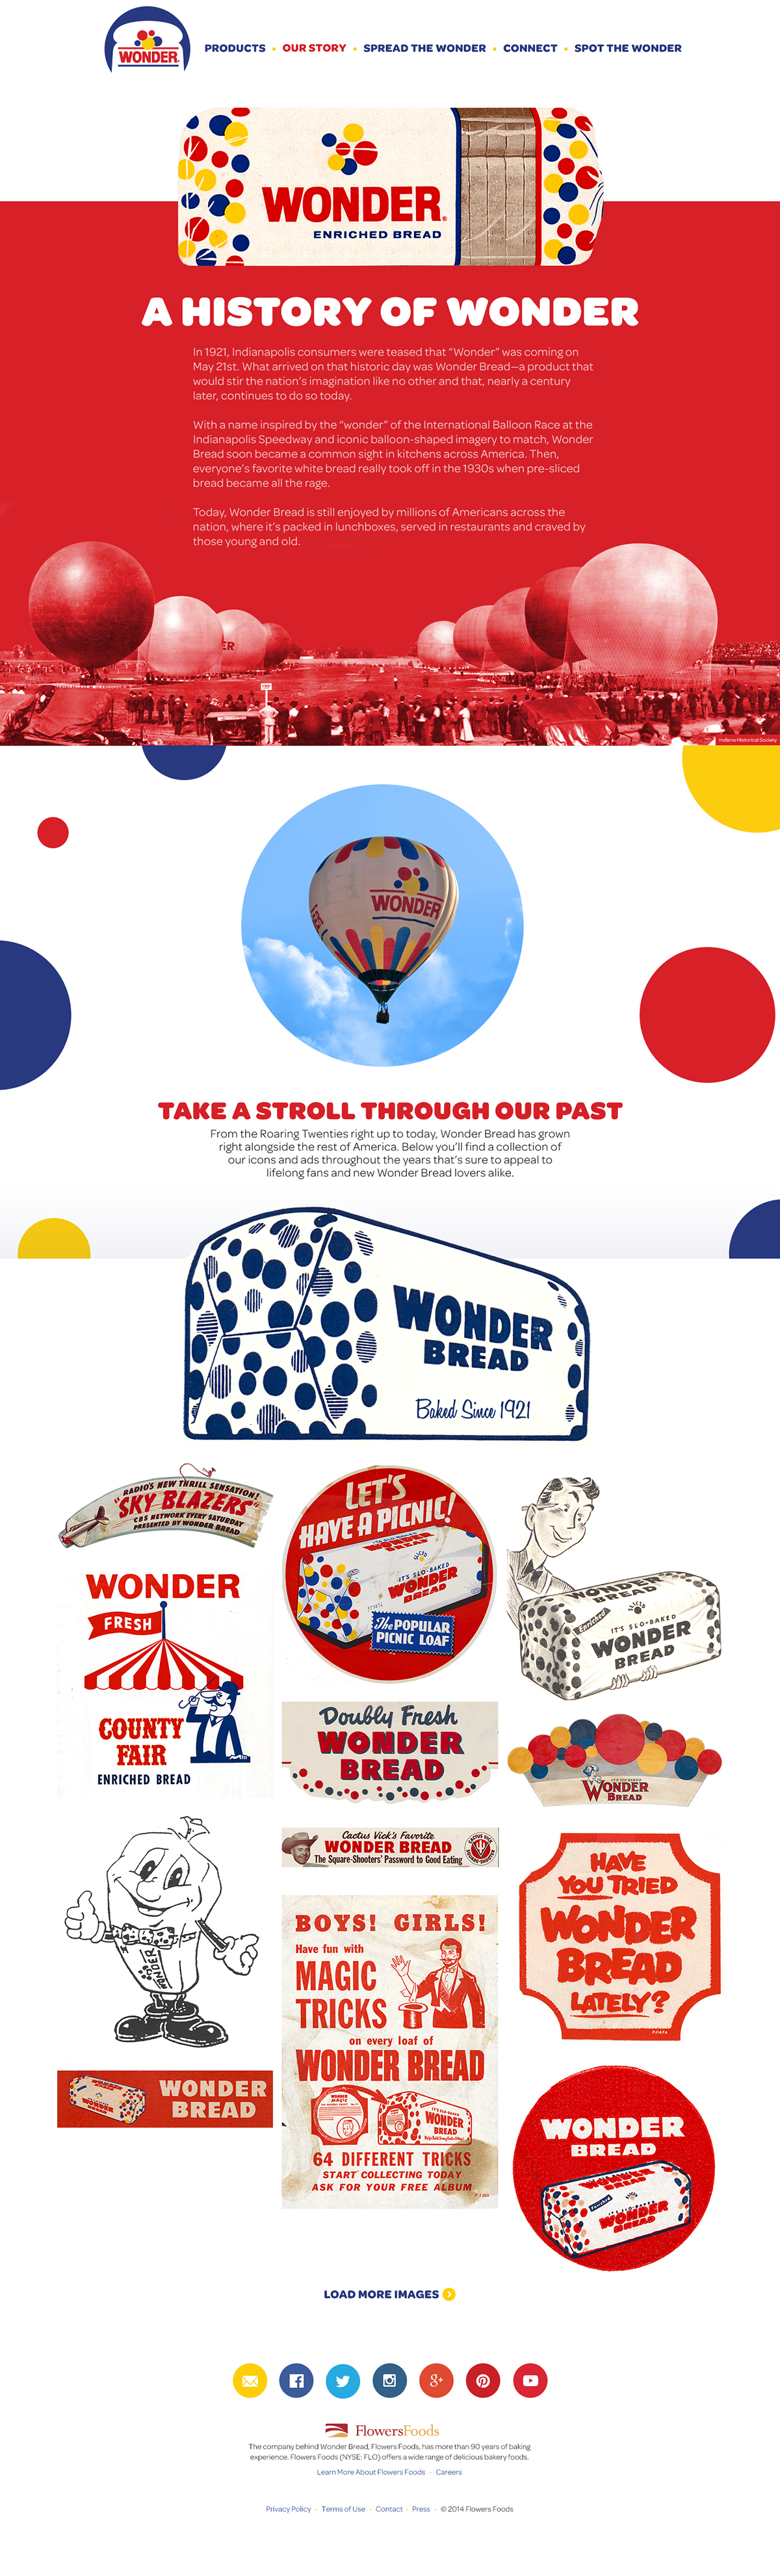 Adobe Portfolio wonder bread wonderbread gifs balloon